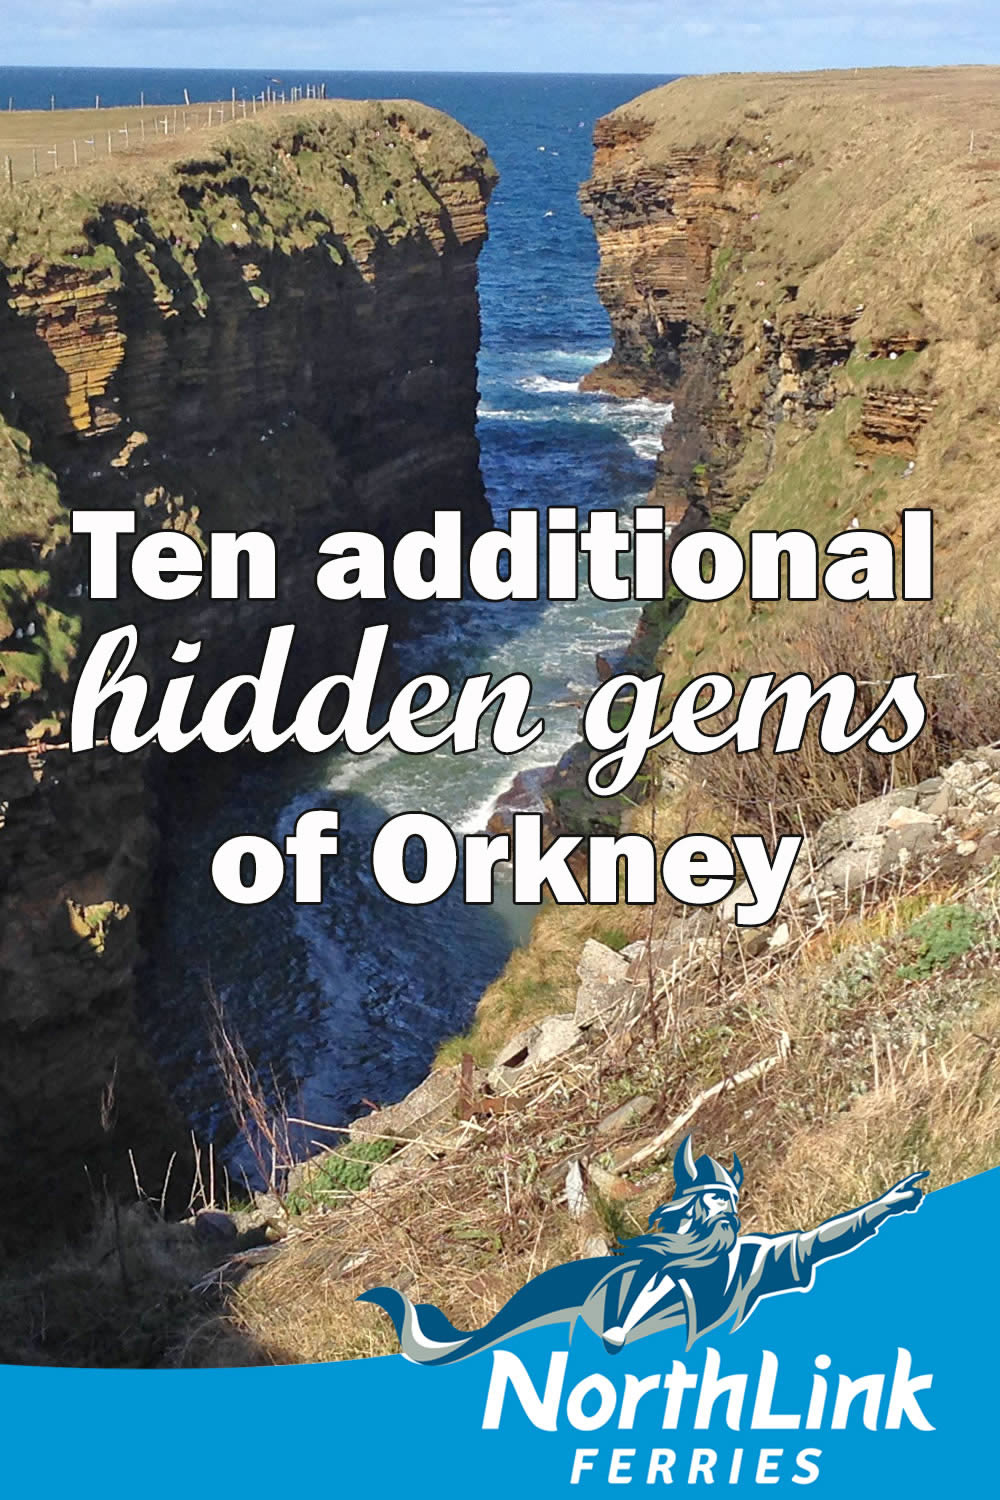 Ten additional hidden gems of Orkney